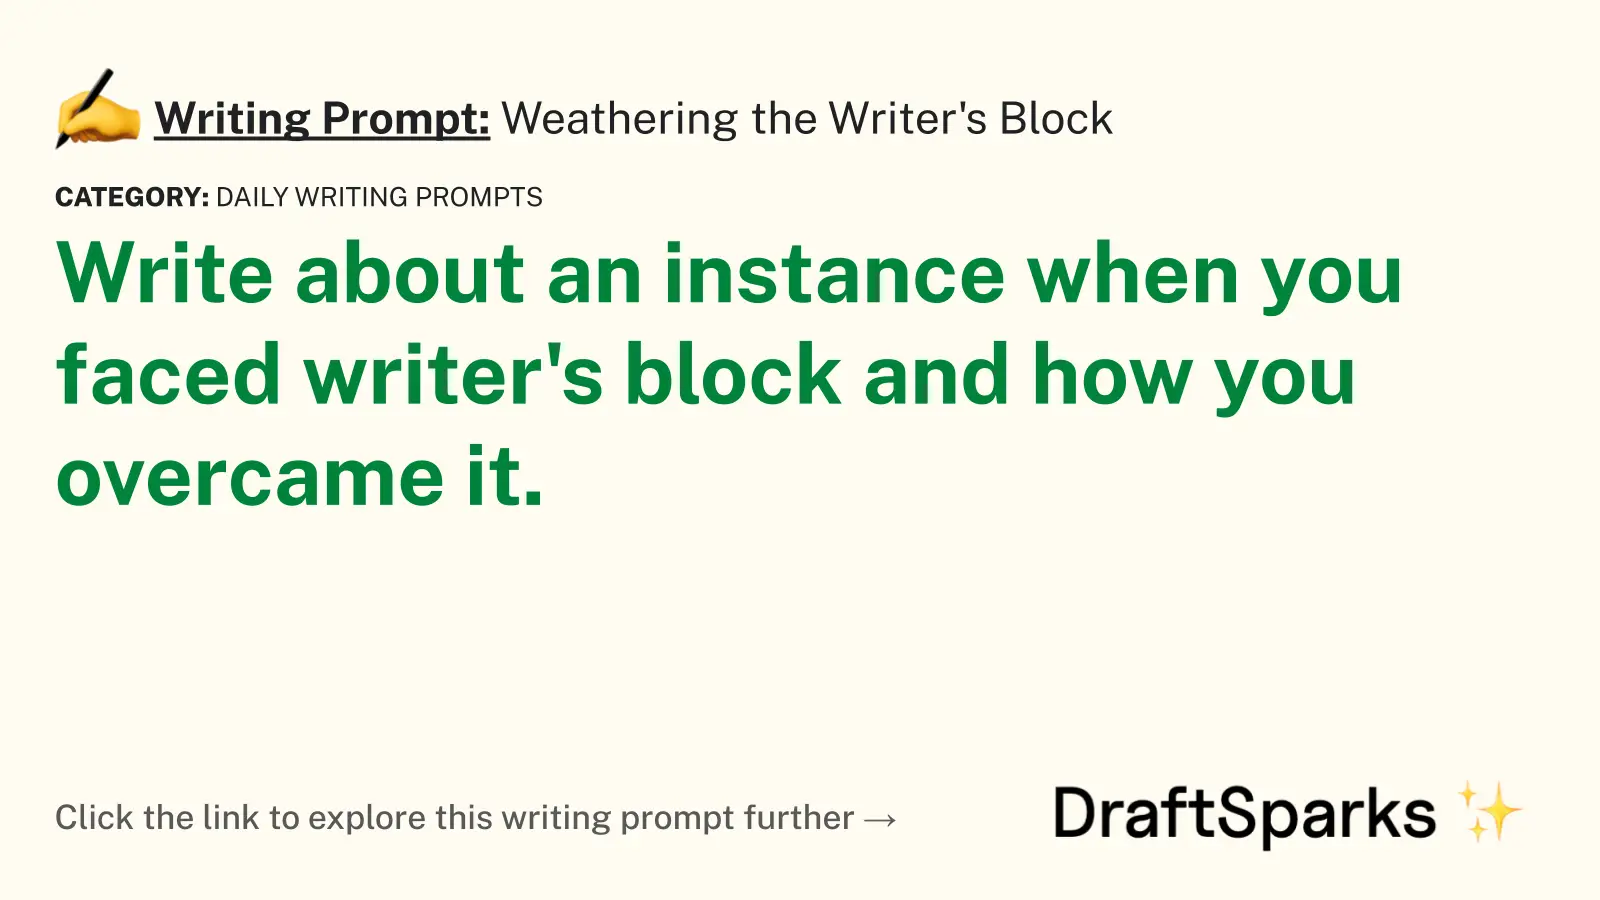 Weathering the Writer’s Block